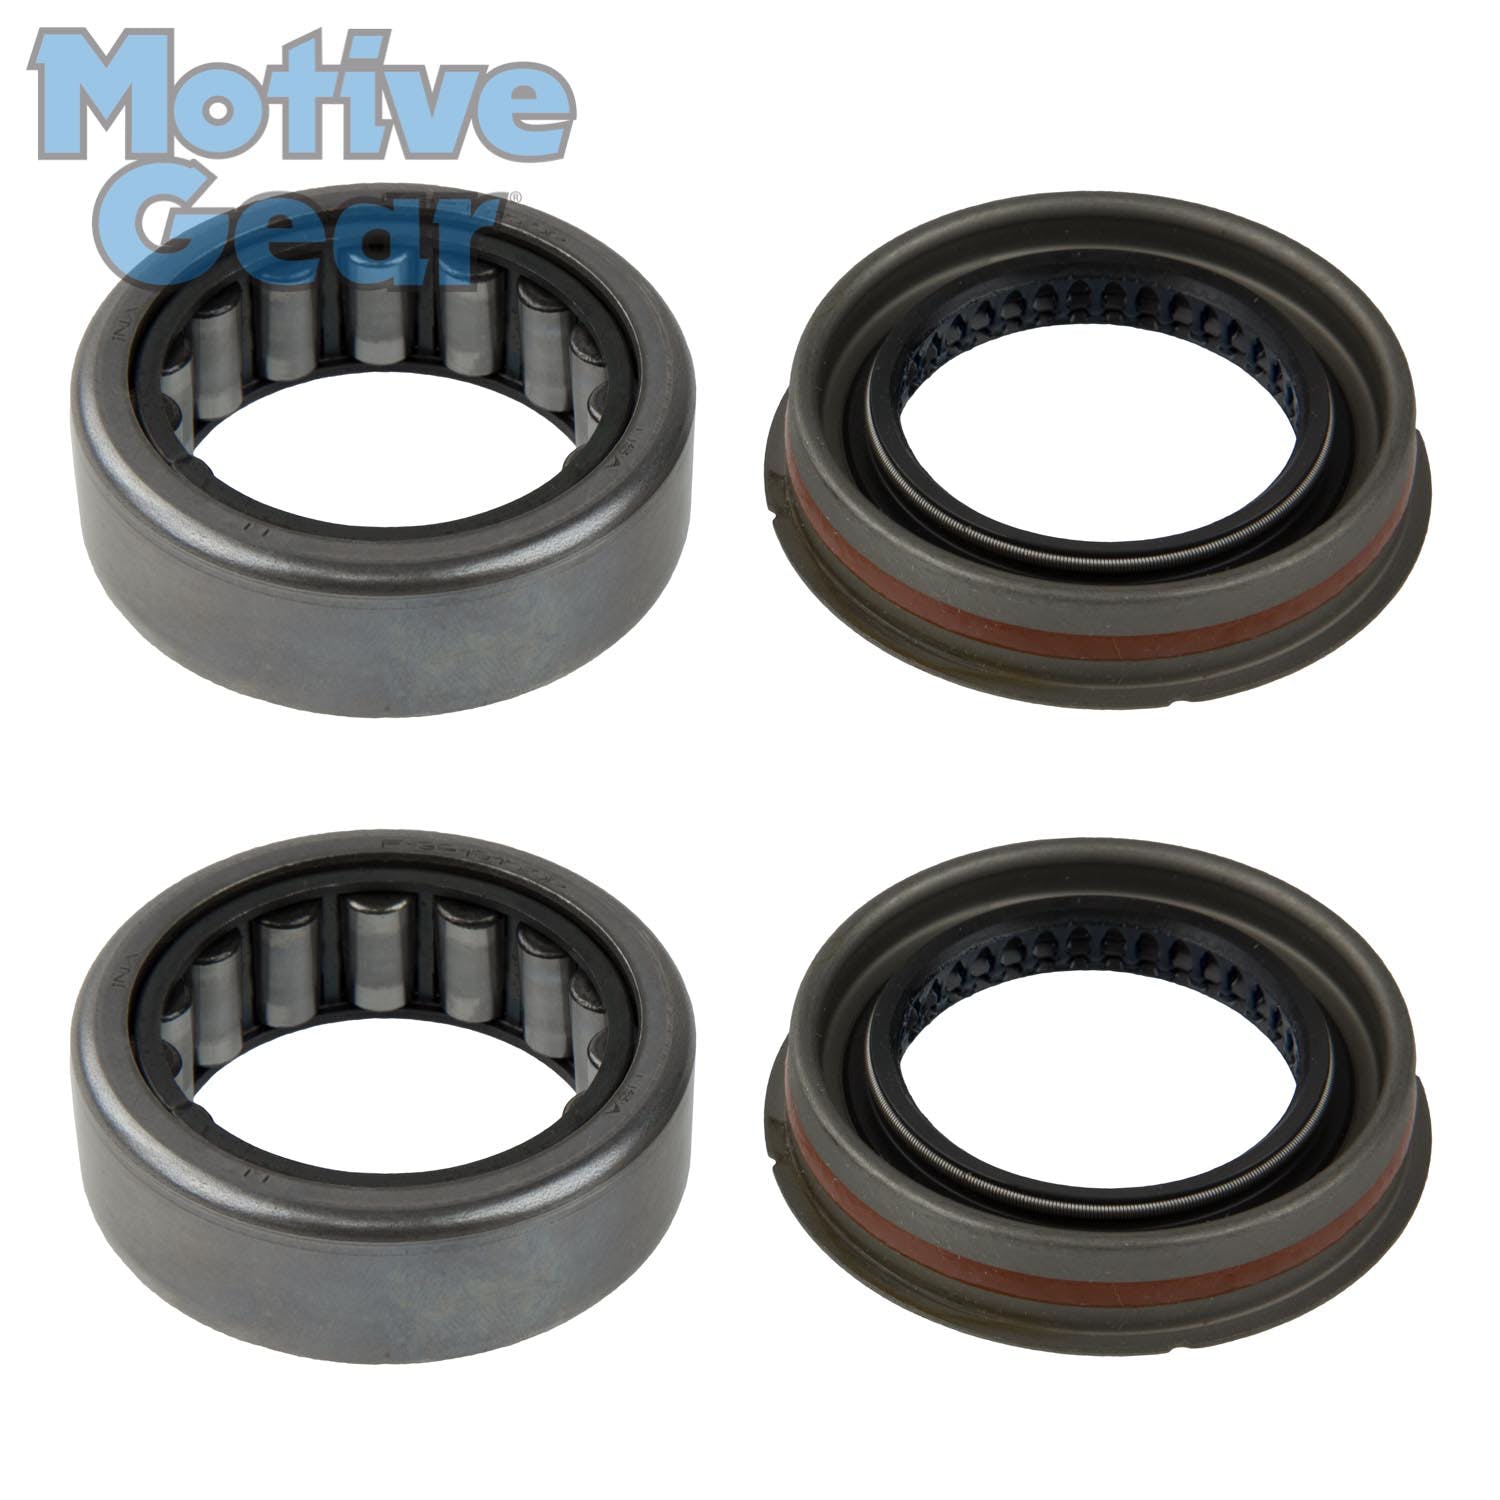 Motive Gear KIT 6410 Axle Bearing and Seal Kit